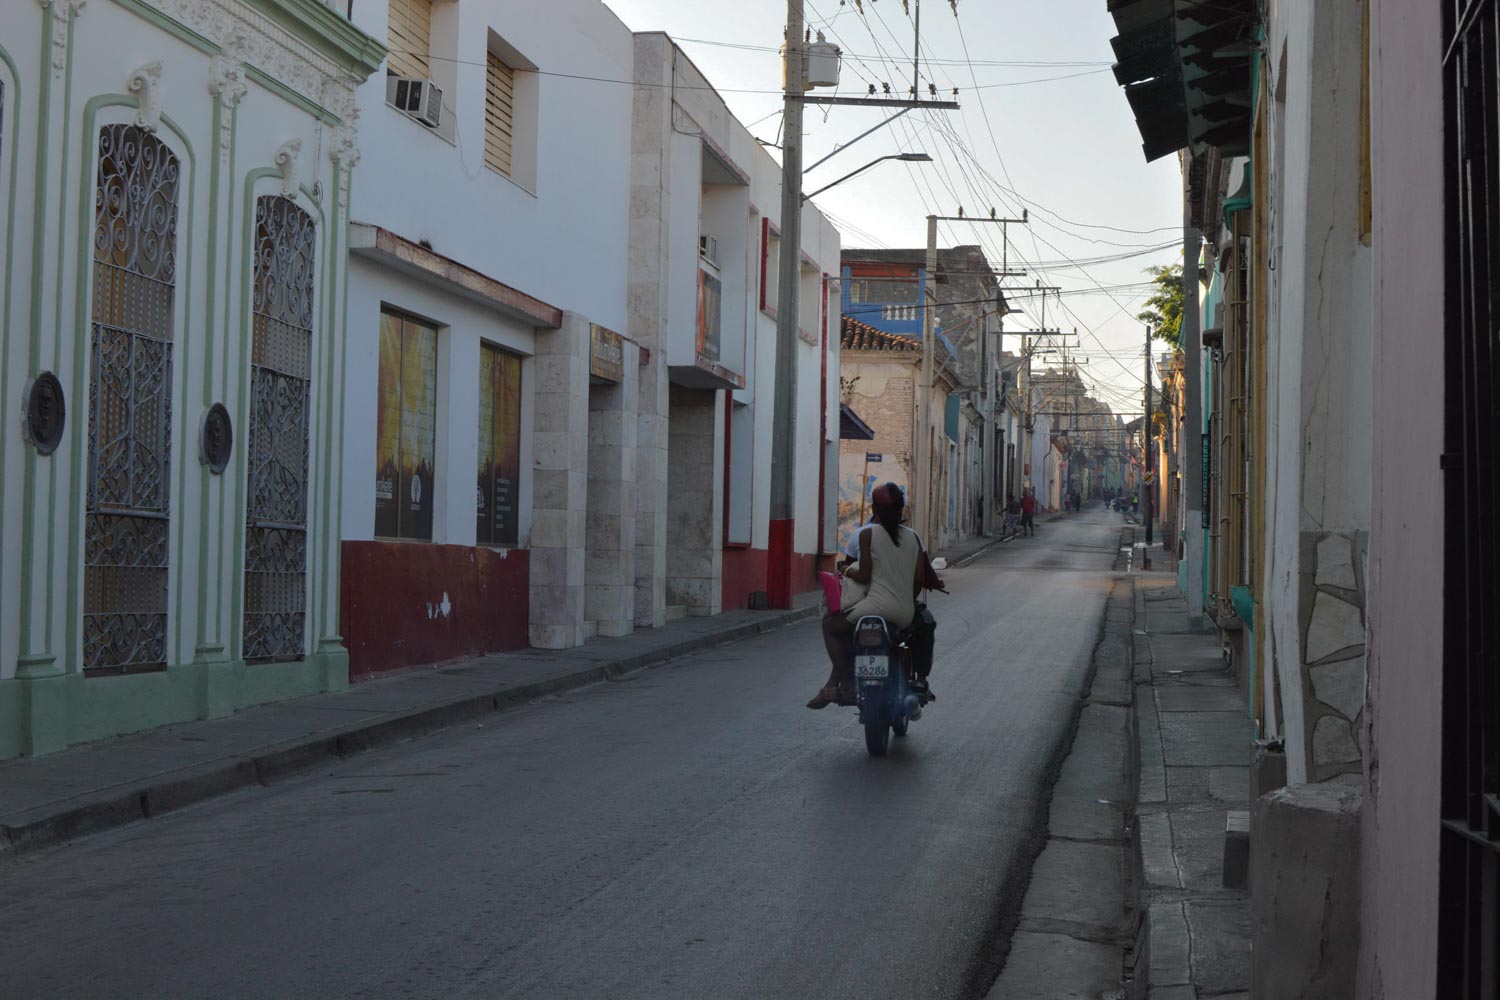 The Soul of Cuba is Santiago